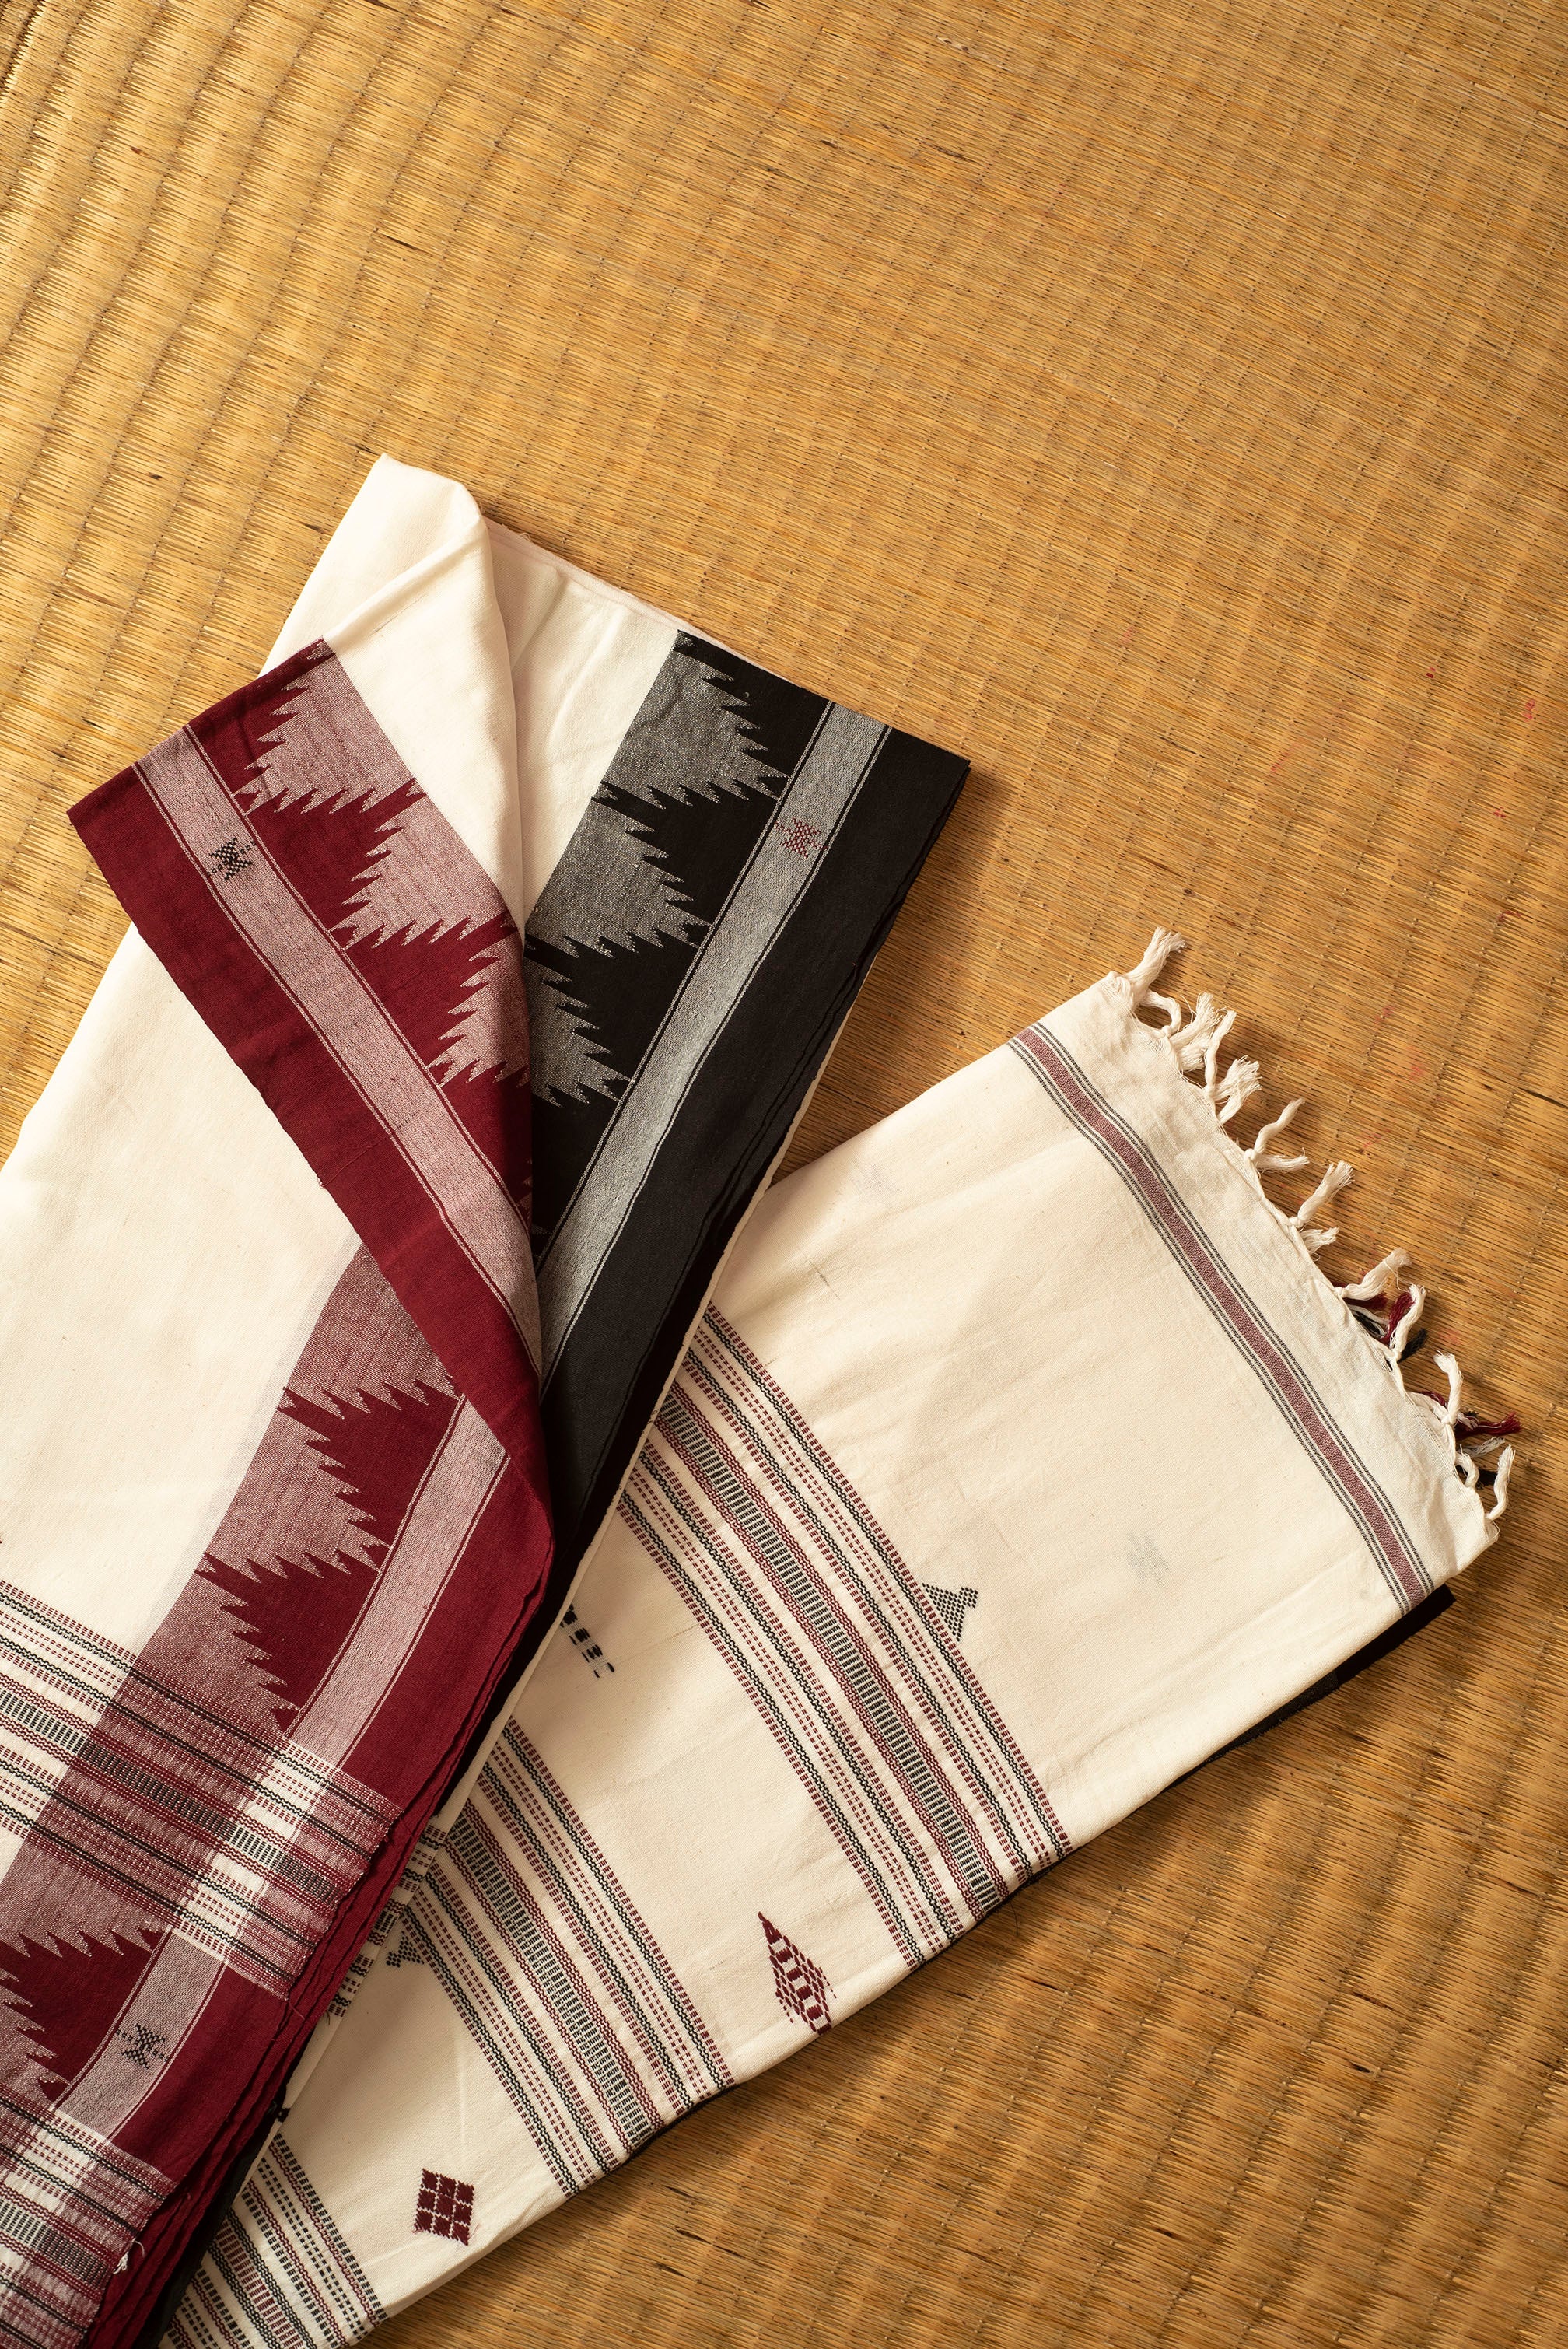 Kotpad handloom cotton saree | natural dyed | true color